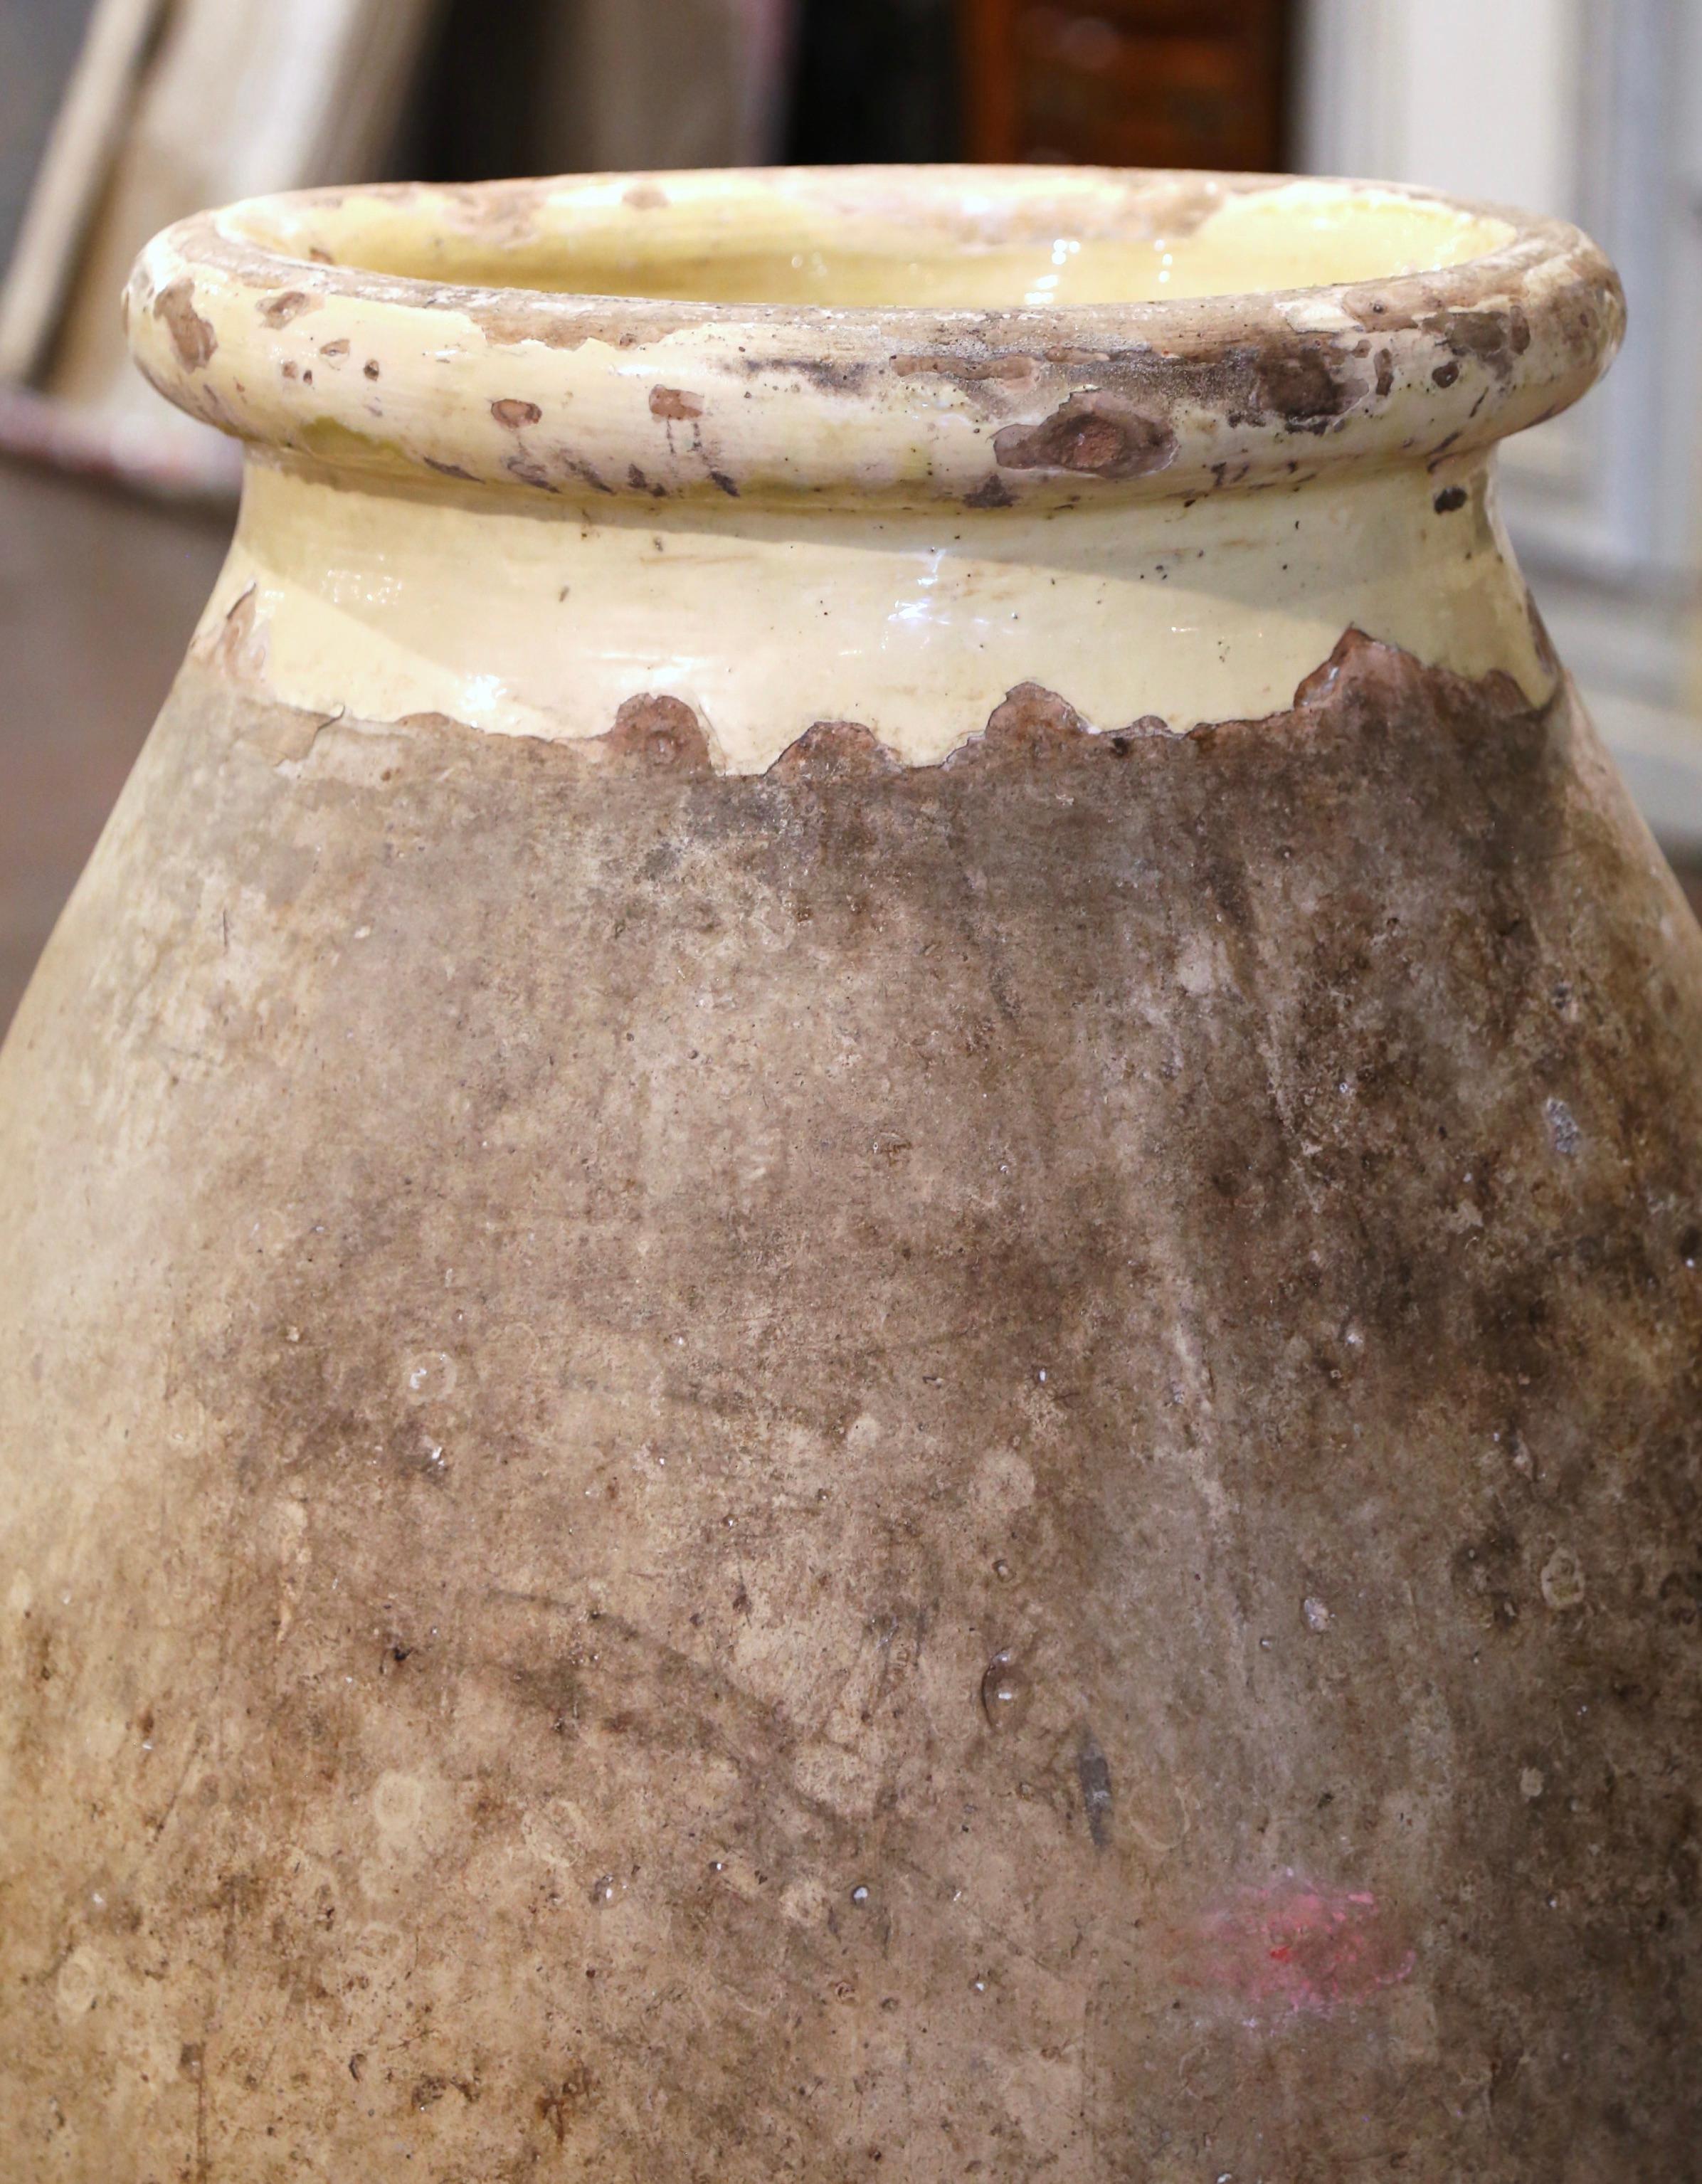 terracotta oil jar